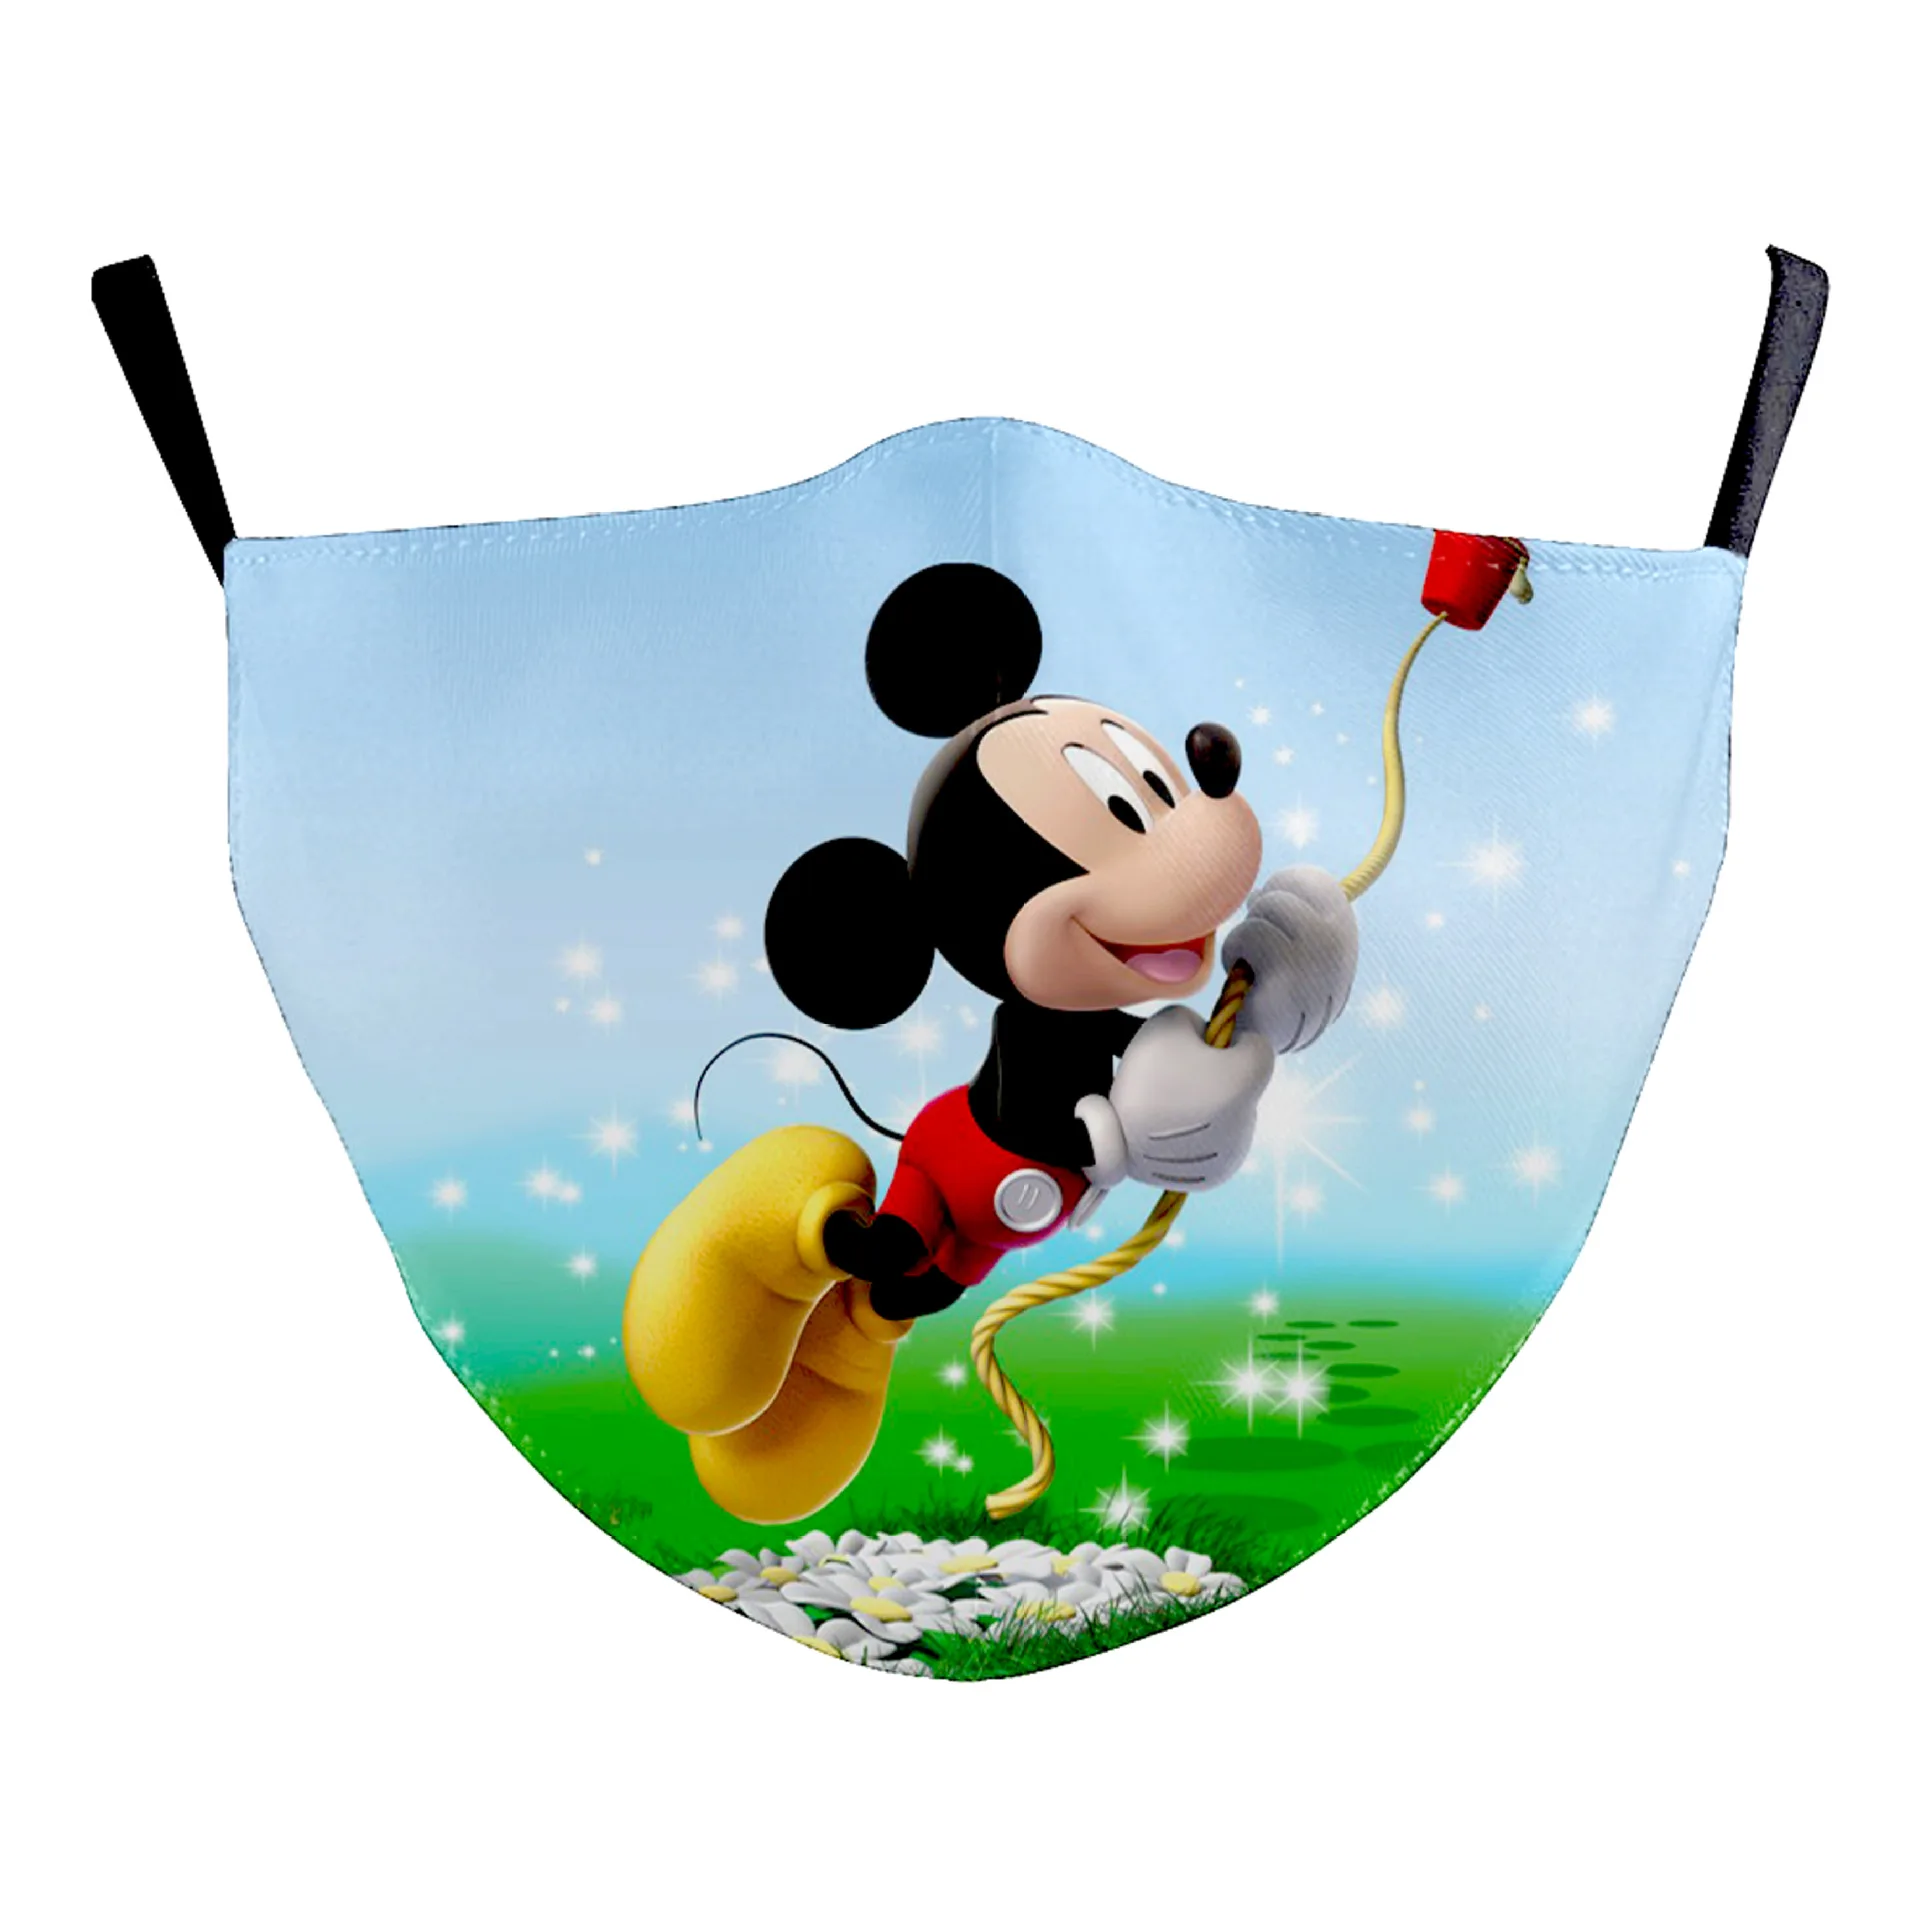 1 BUC Copil Masca Disney Mickey Masca Fata draguta Gura Masca Minnie Masca Lavabil Reusabel Masca Designer Copil cu 2 Filtre Gratuite 0